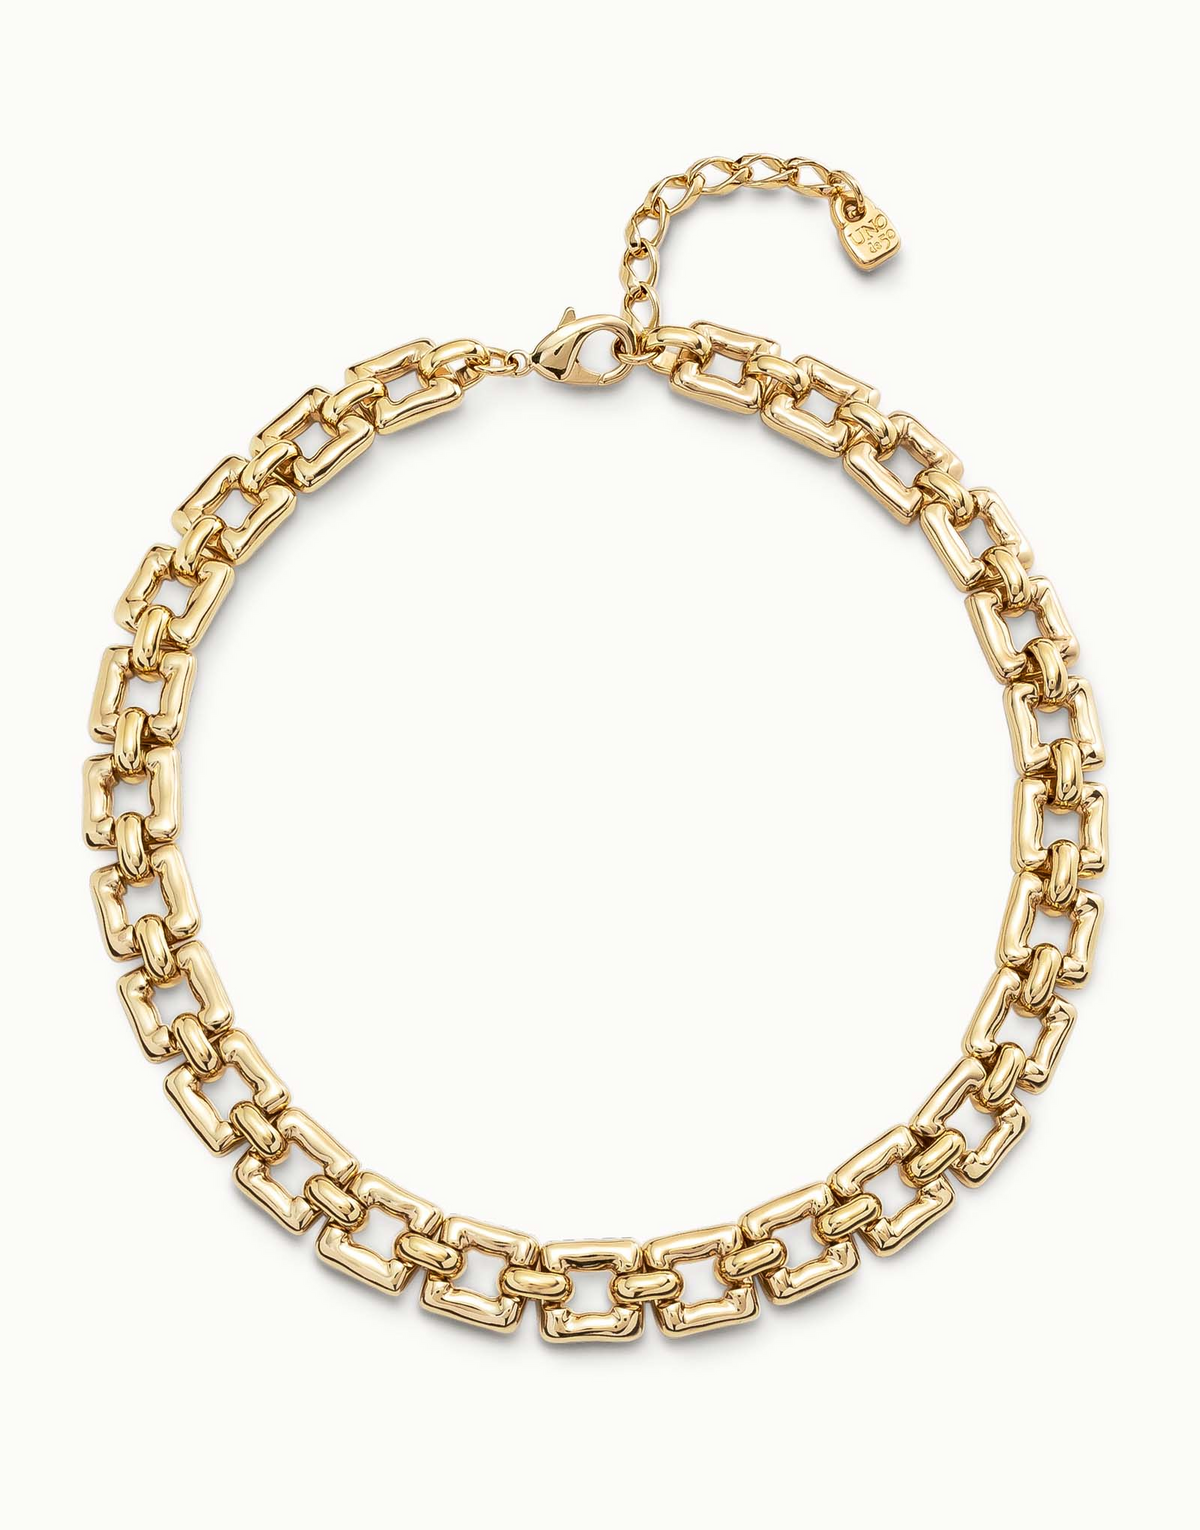 Femme Fatale Gold Necklace